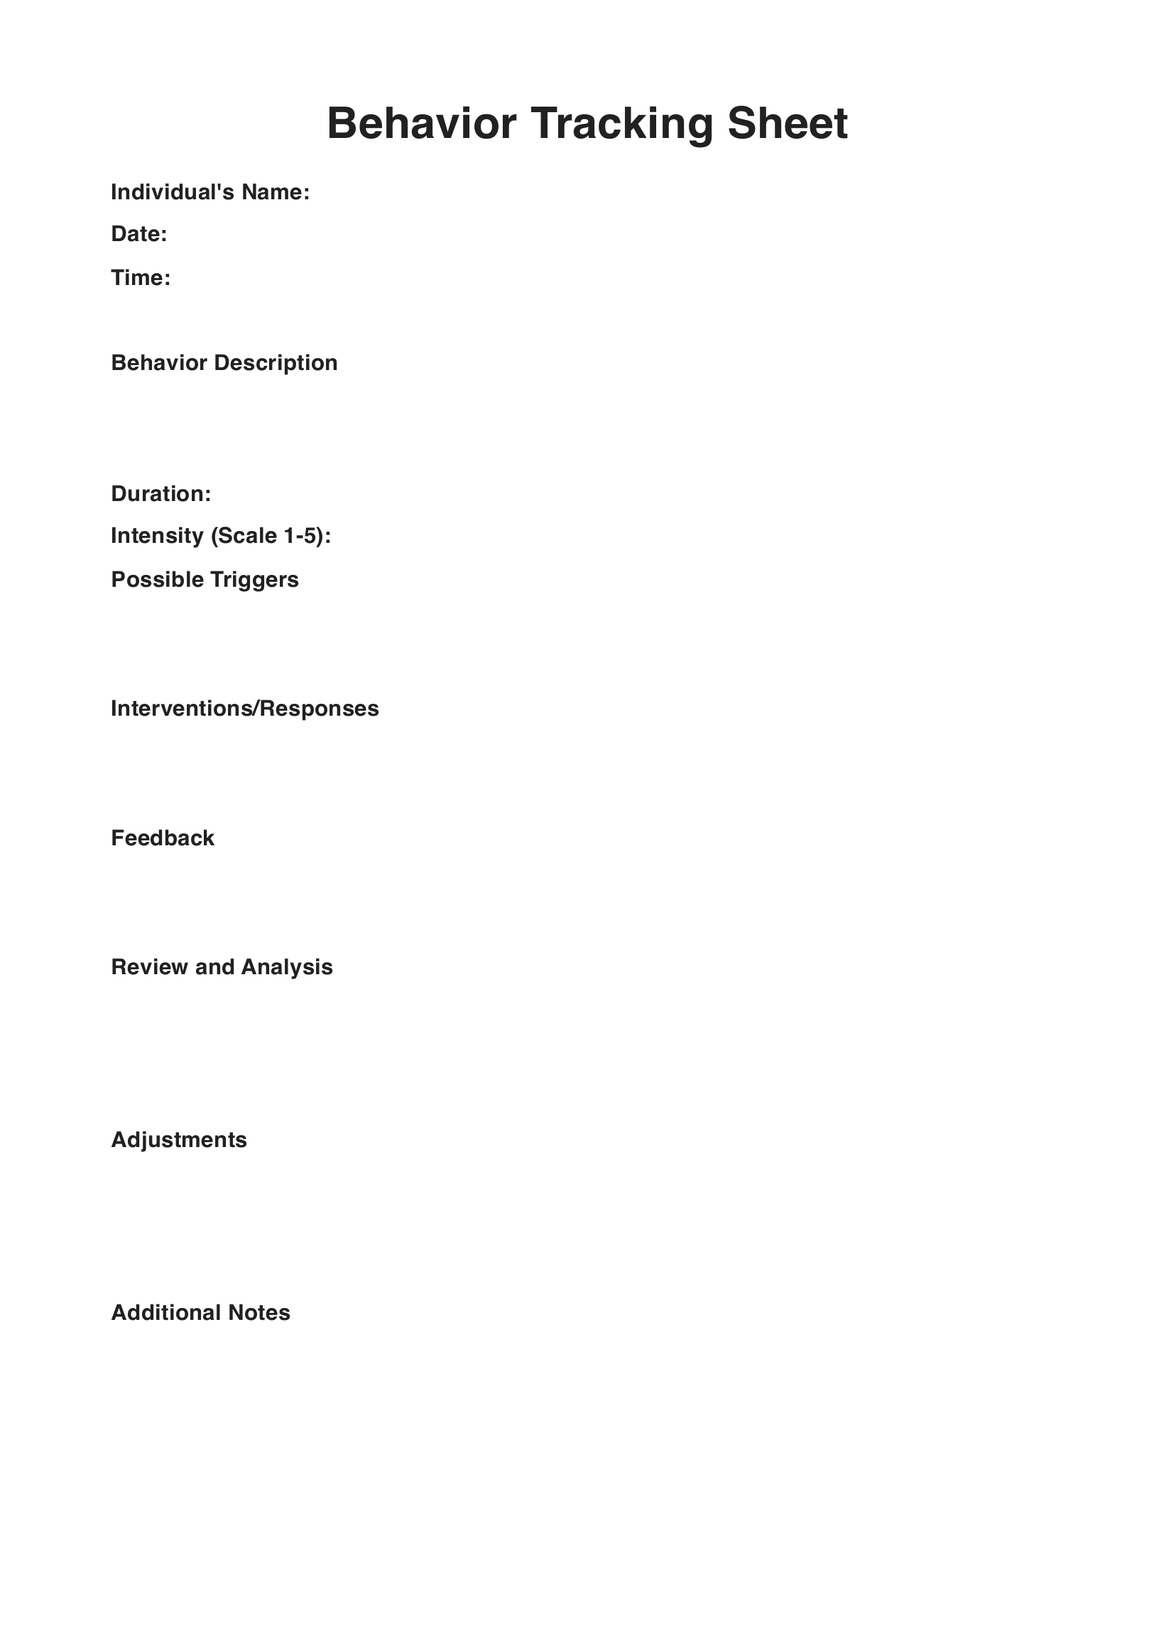 Behavior Tracking Sheets PDF Example